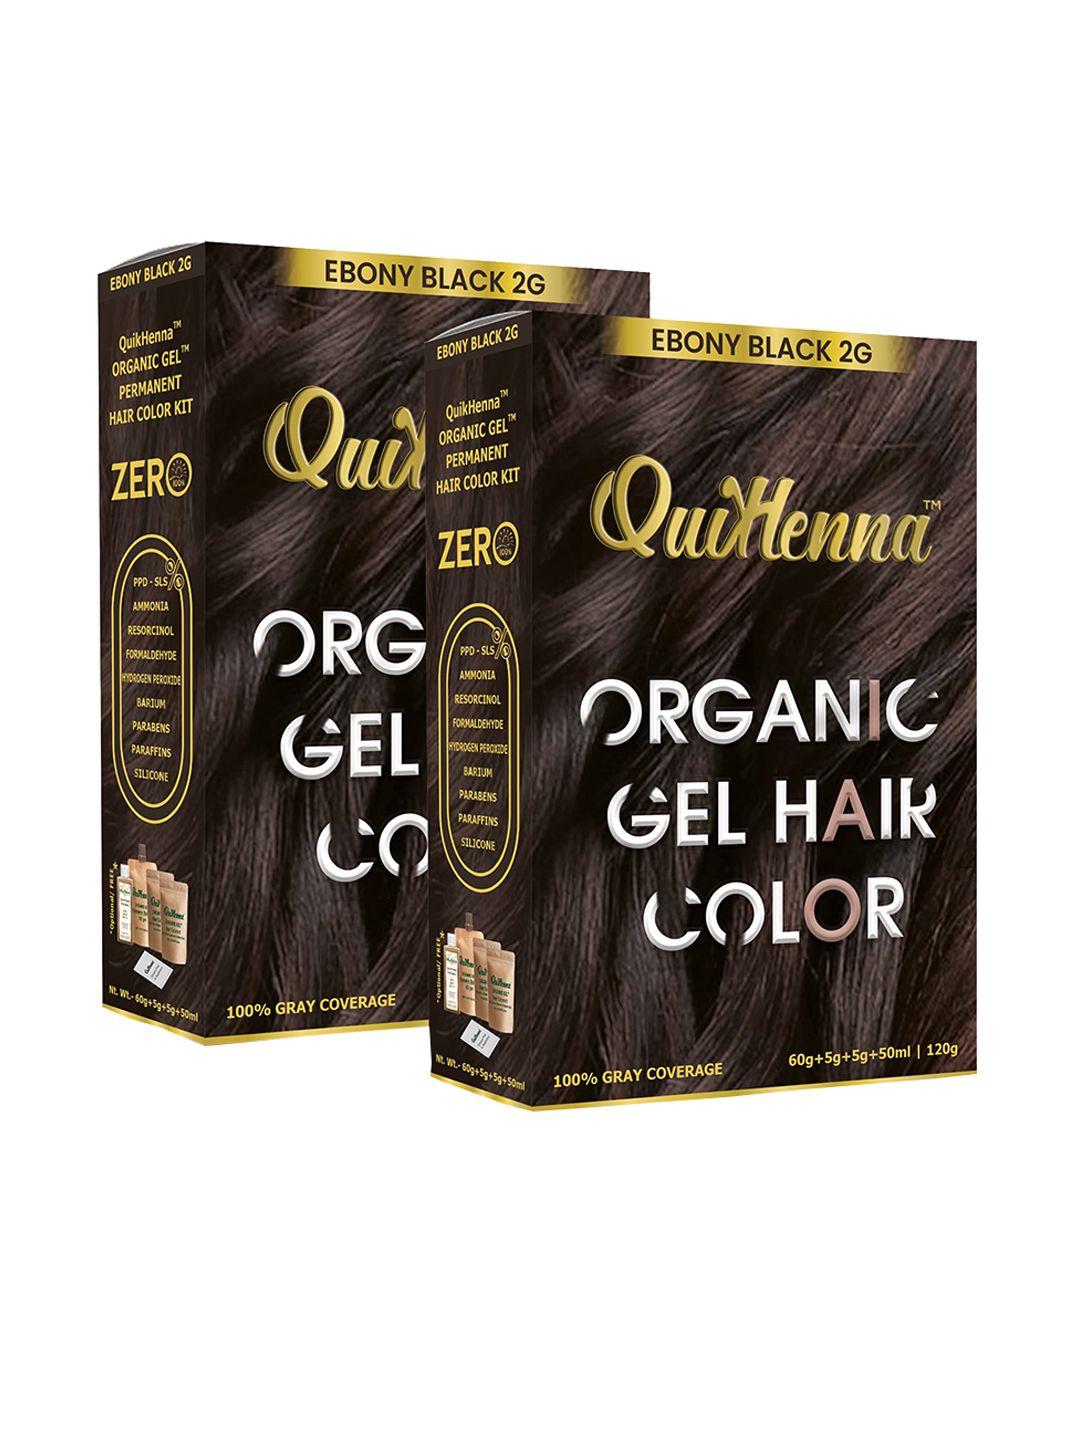 quikhenna set of 2 damage free organic gel hair color 120 g each - ebony black 2g